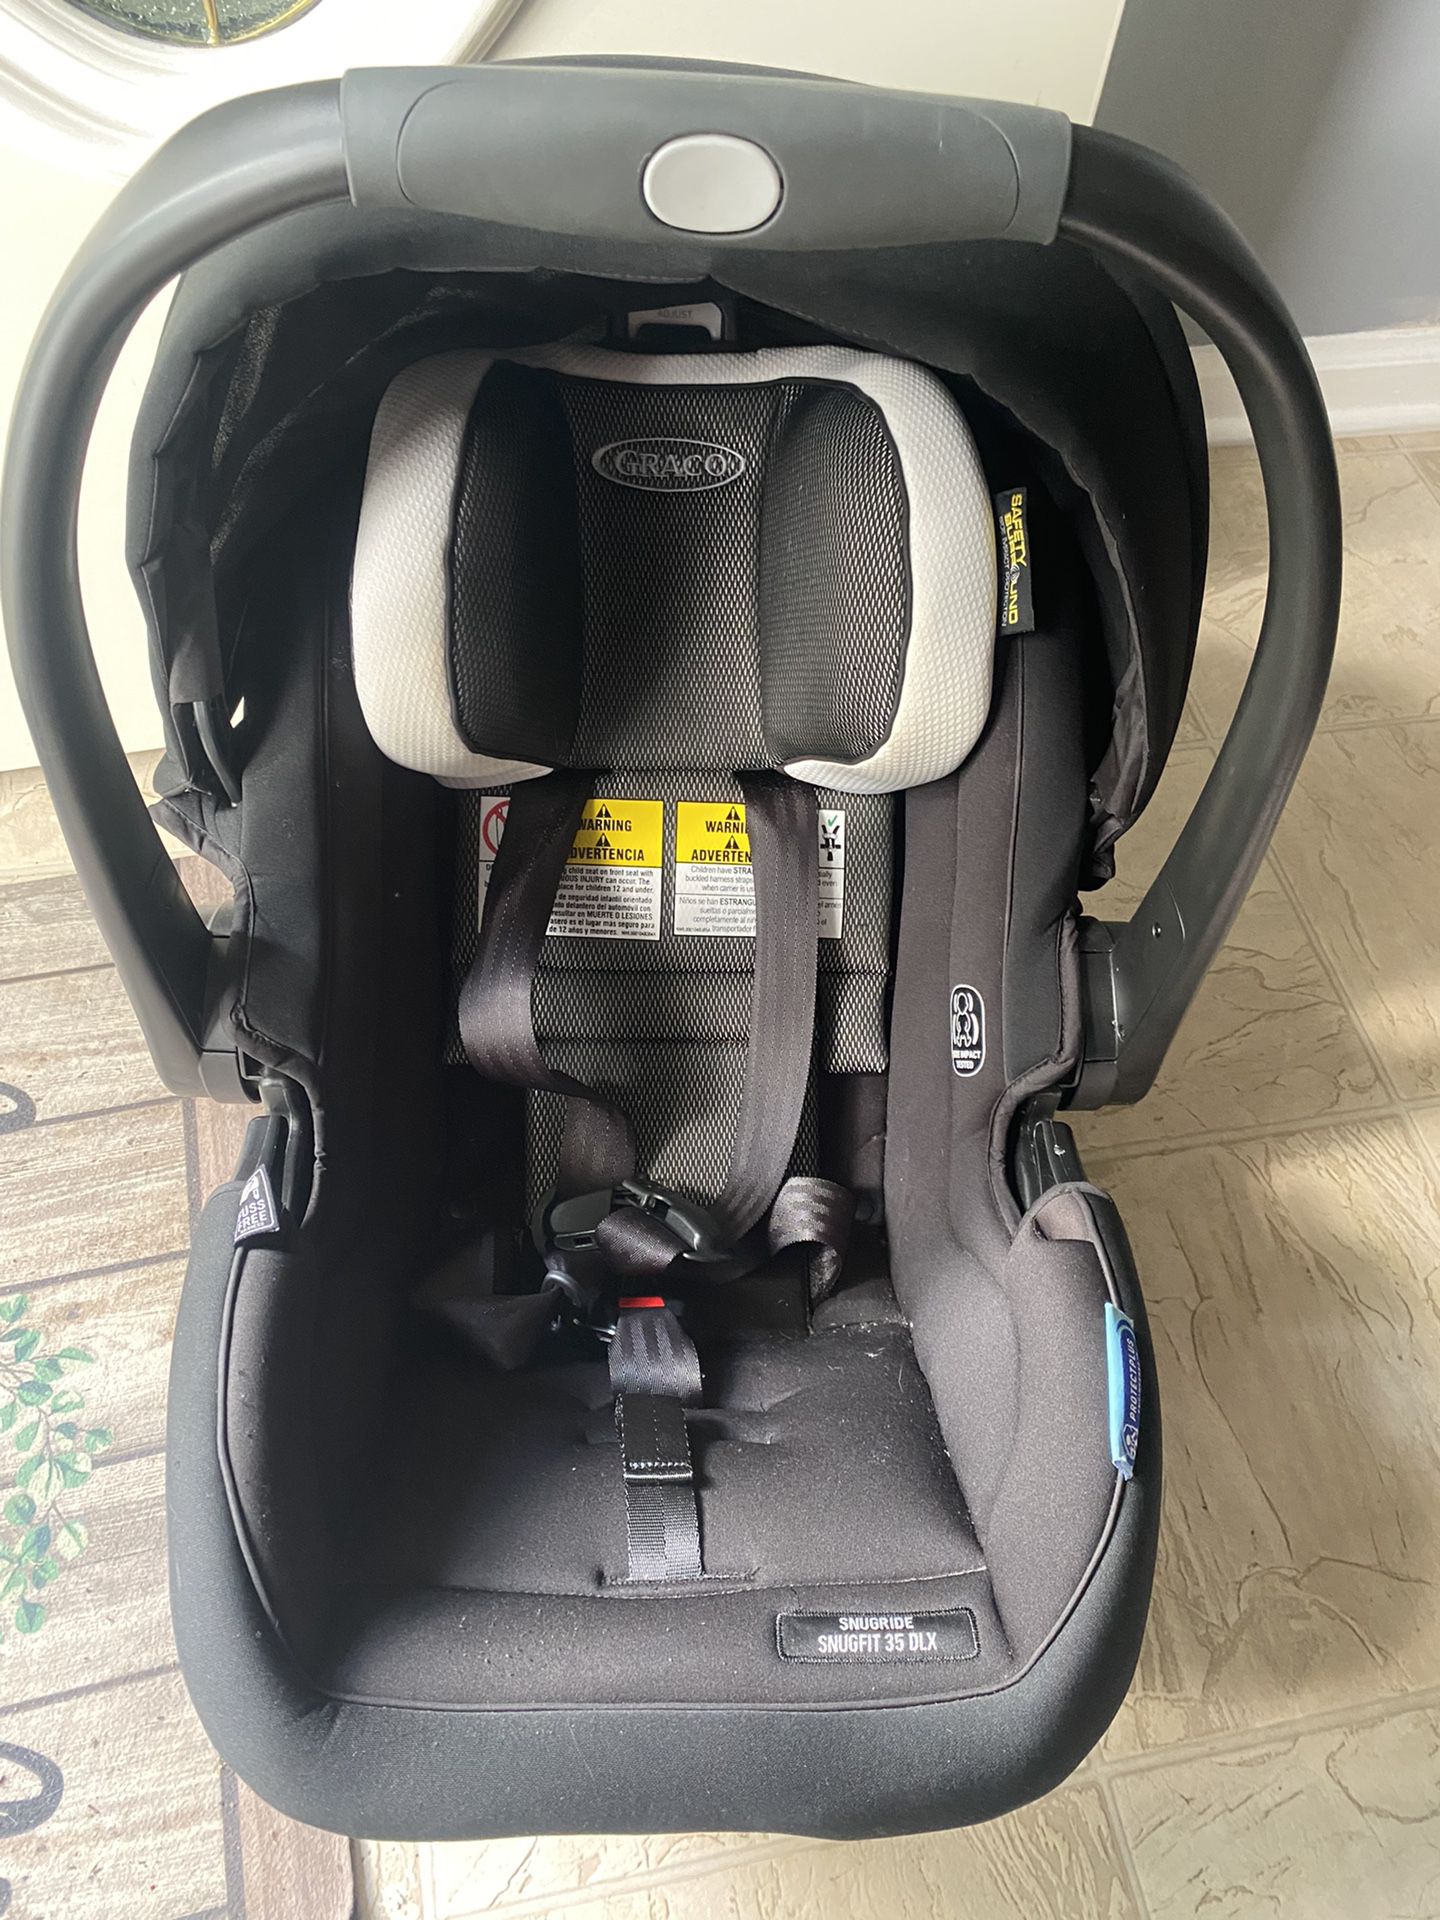 Graco baby Car Seat